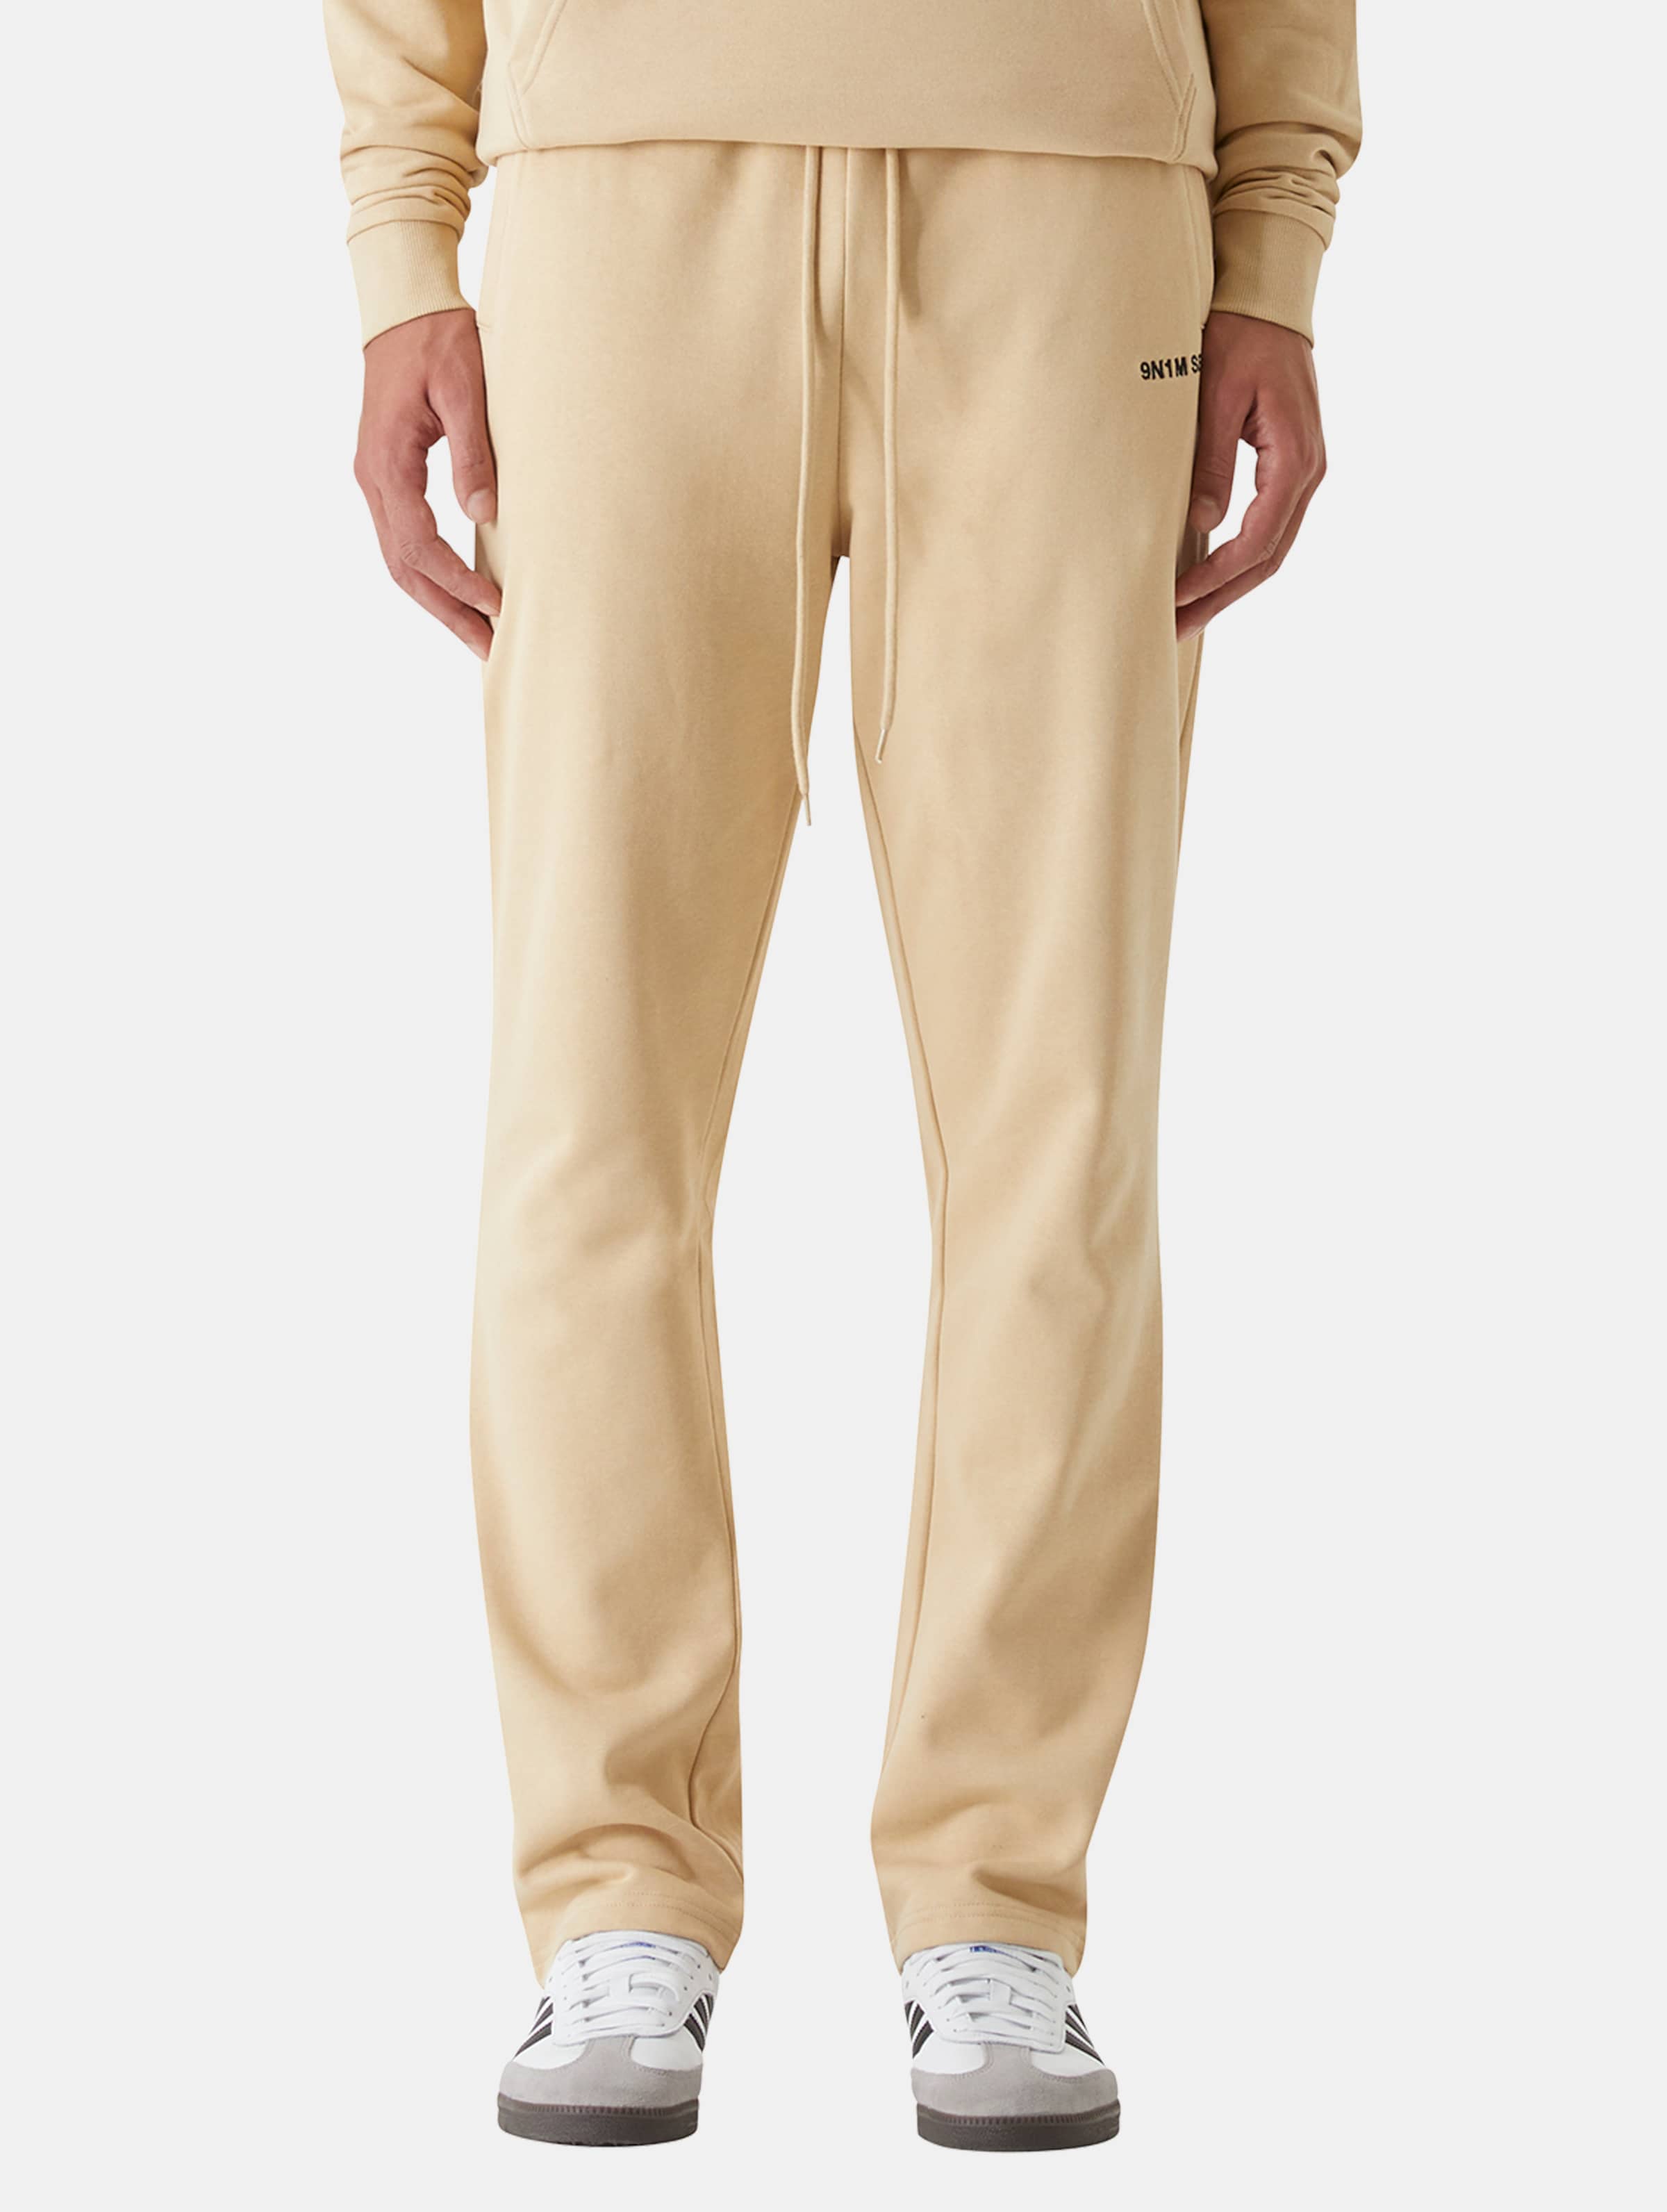 9N1M SENSE Essential Straight Jogginghosen Männer,Unisex op kleur beige, Maat L